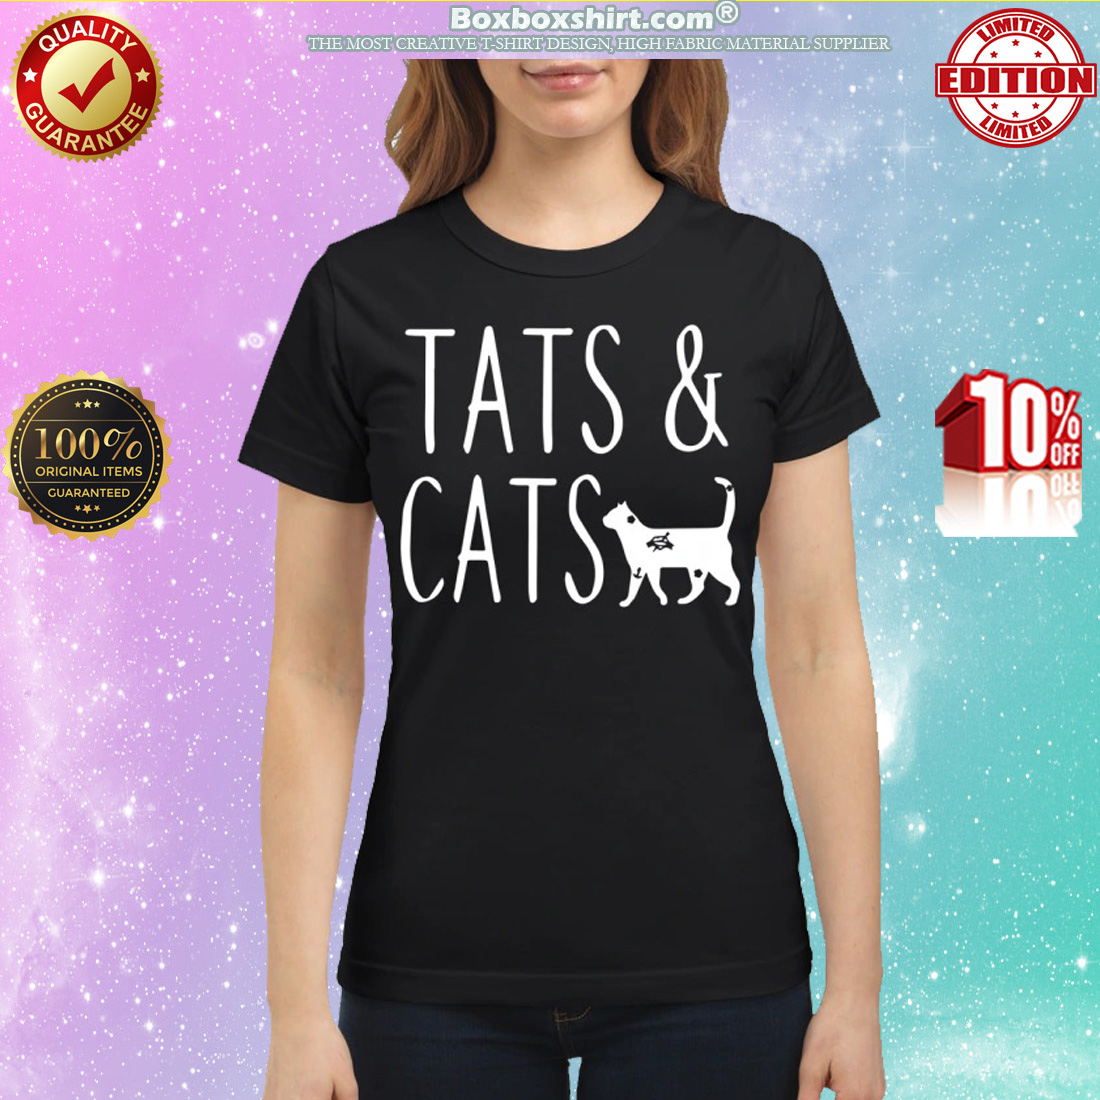 Tats and cats classic shirt